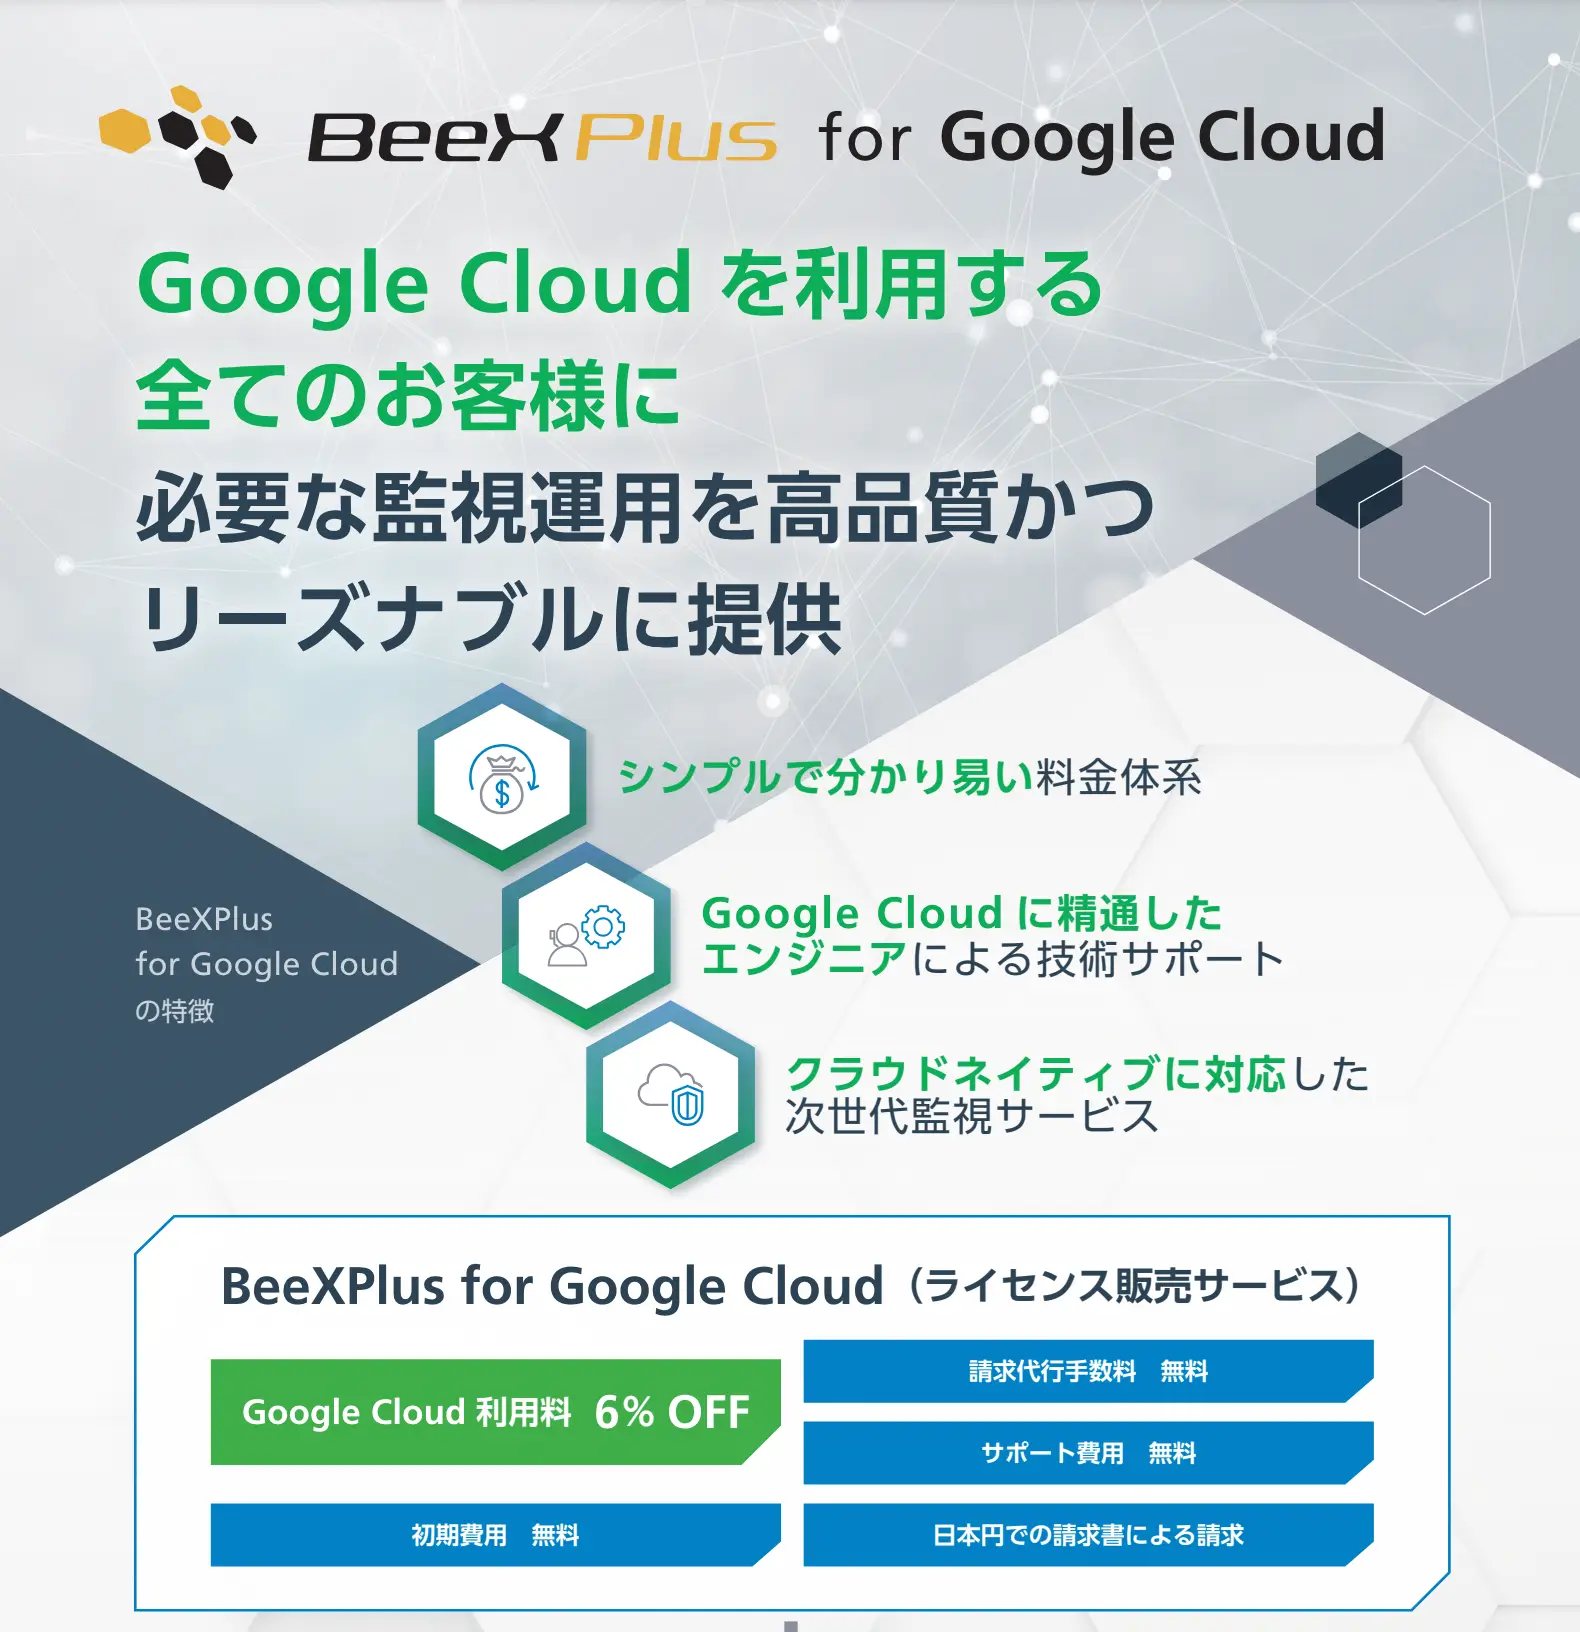 BeeXPlus for Google Cloud紹介リーフレット